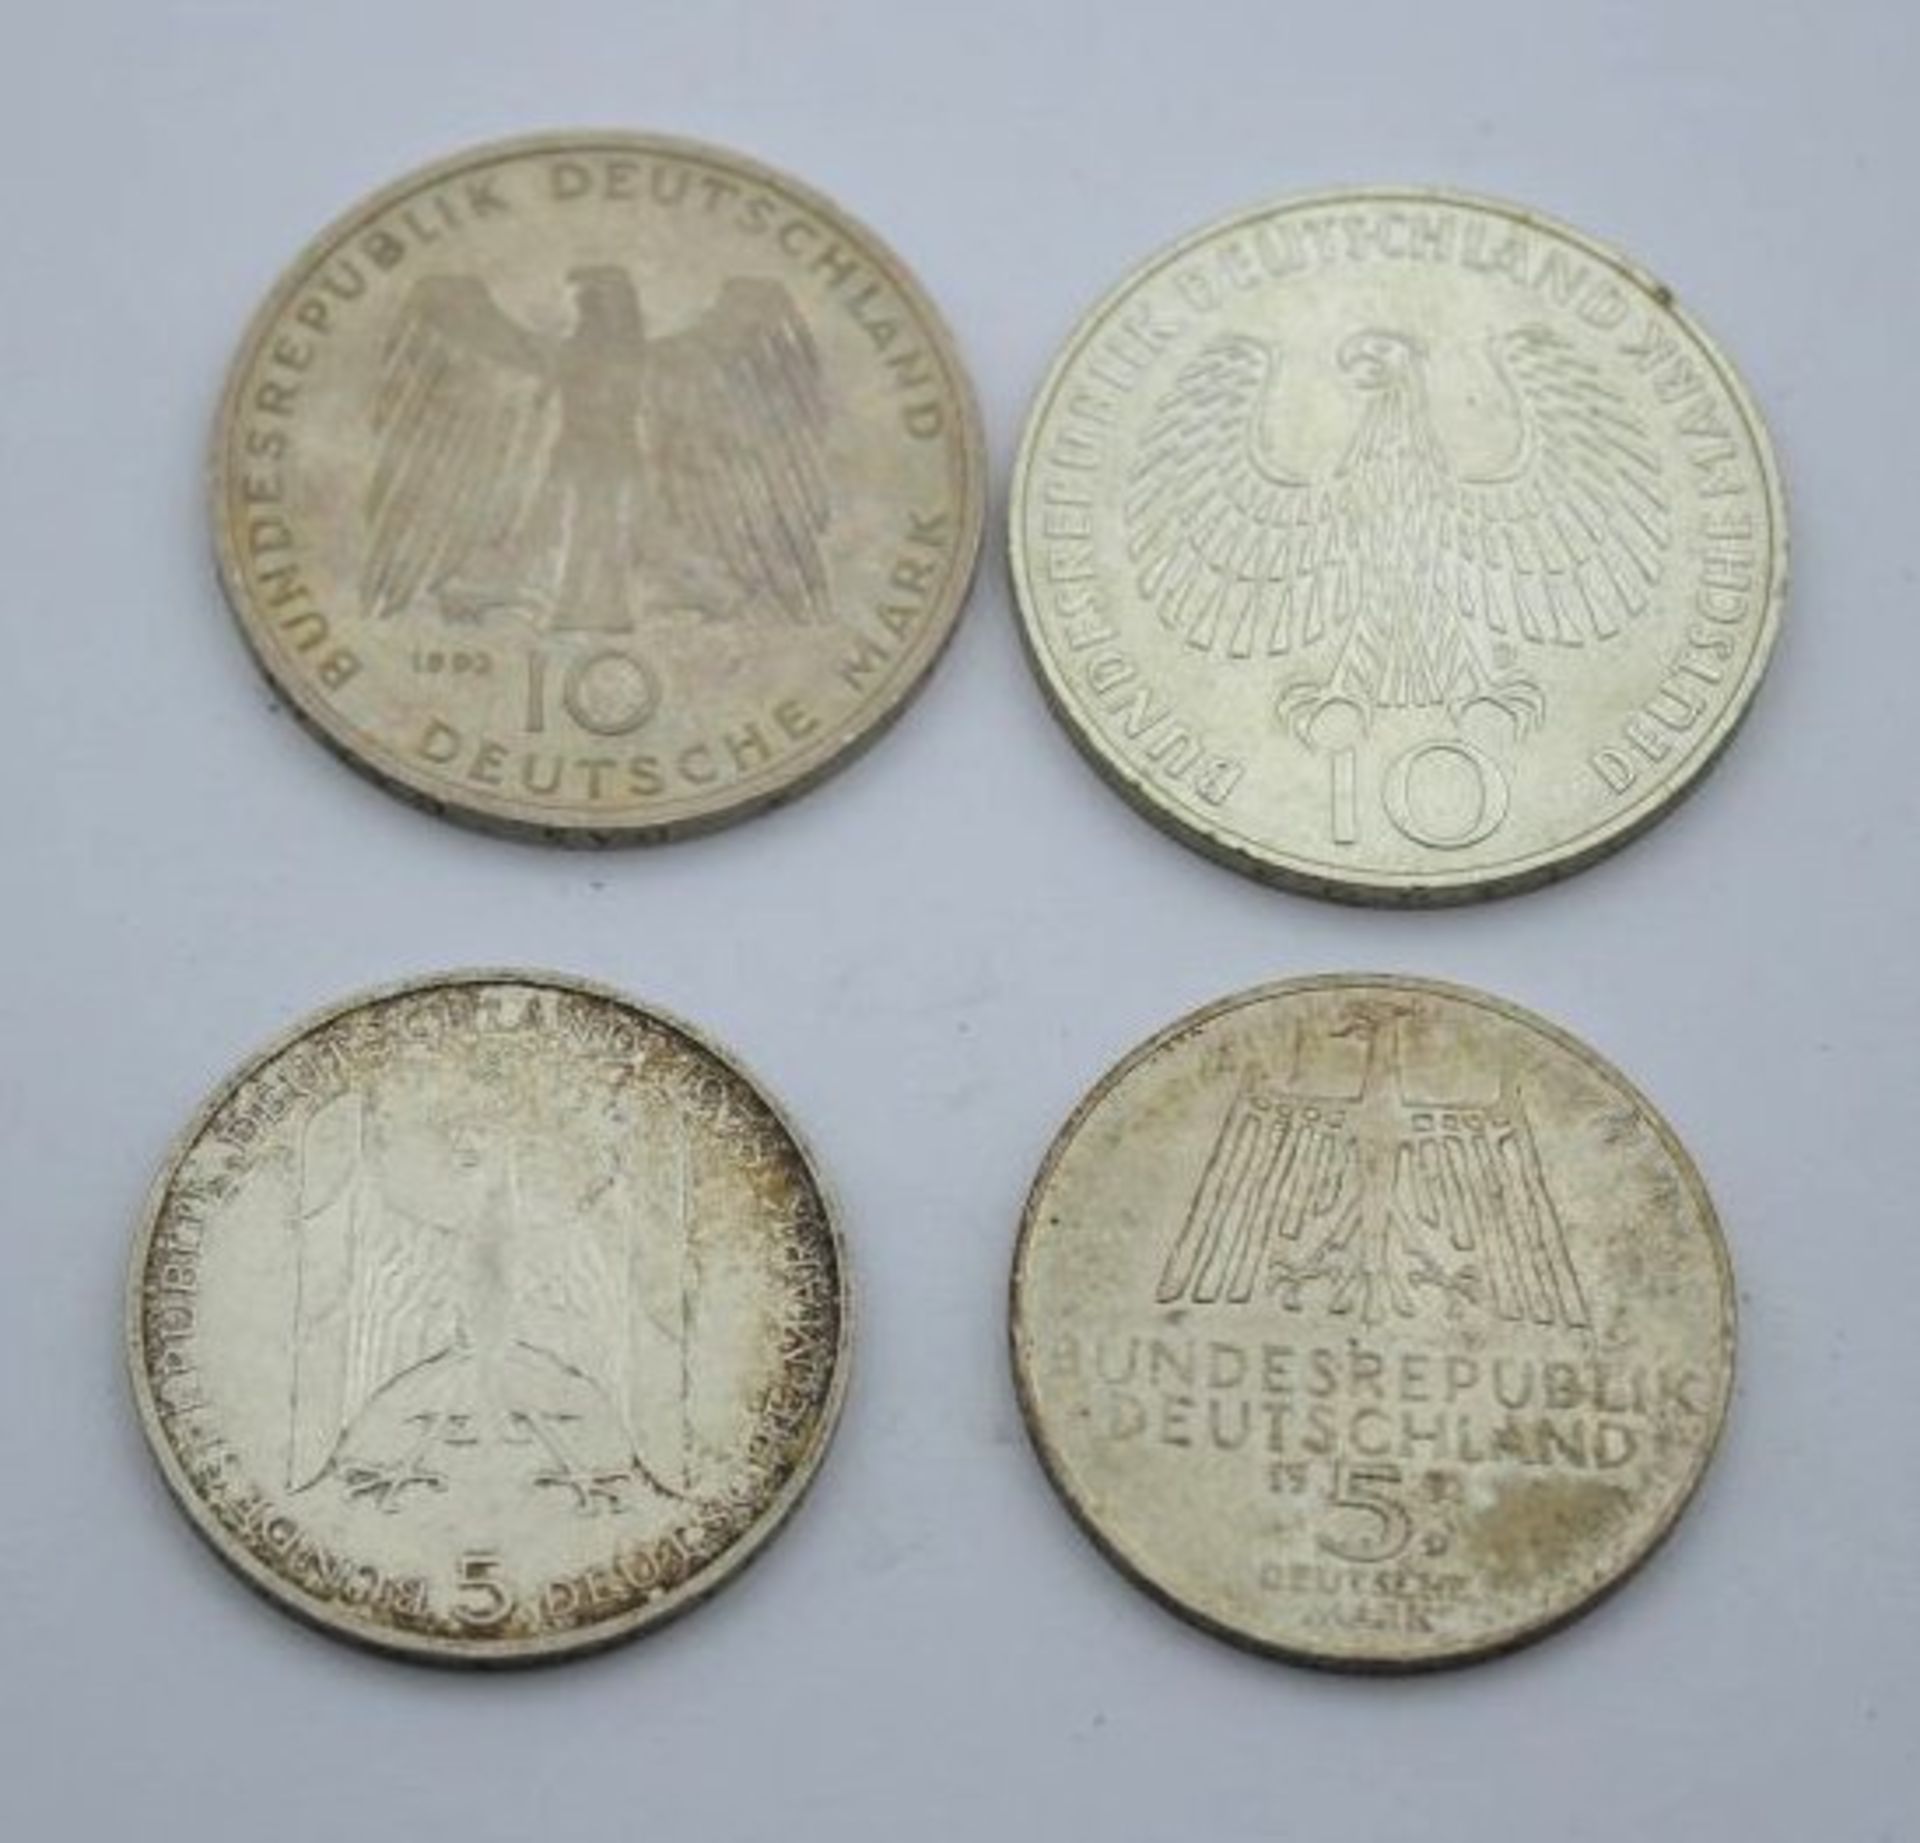 2x 10 DM Münzen 1972 D u. 1993 F sowie 2x 5 DM 1971 D u. 1978 D.